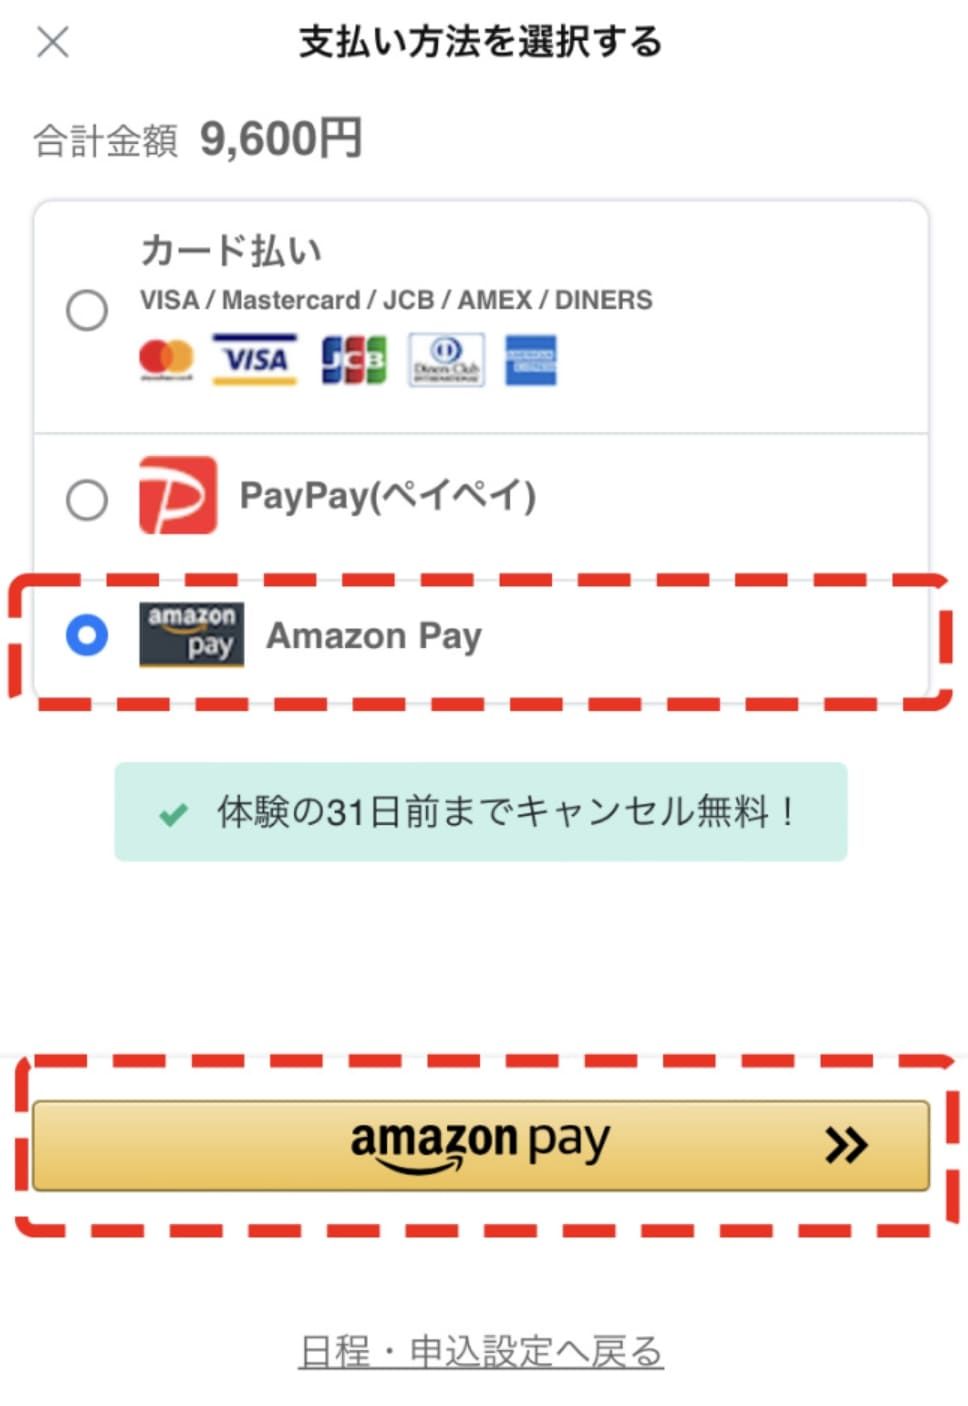 Amazon Pay支払方法を選択